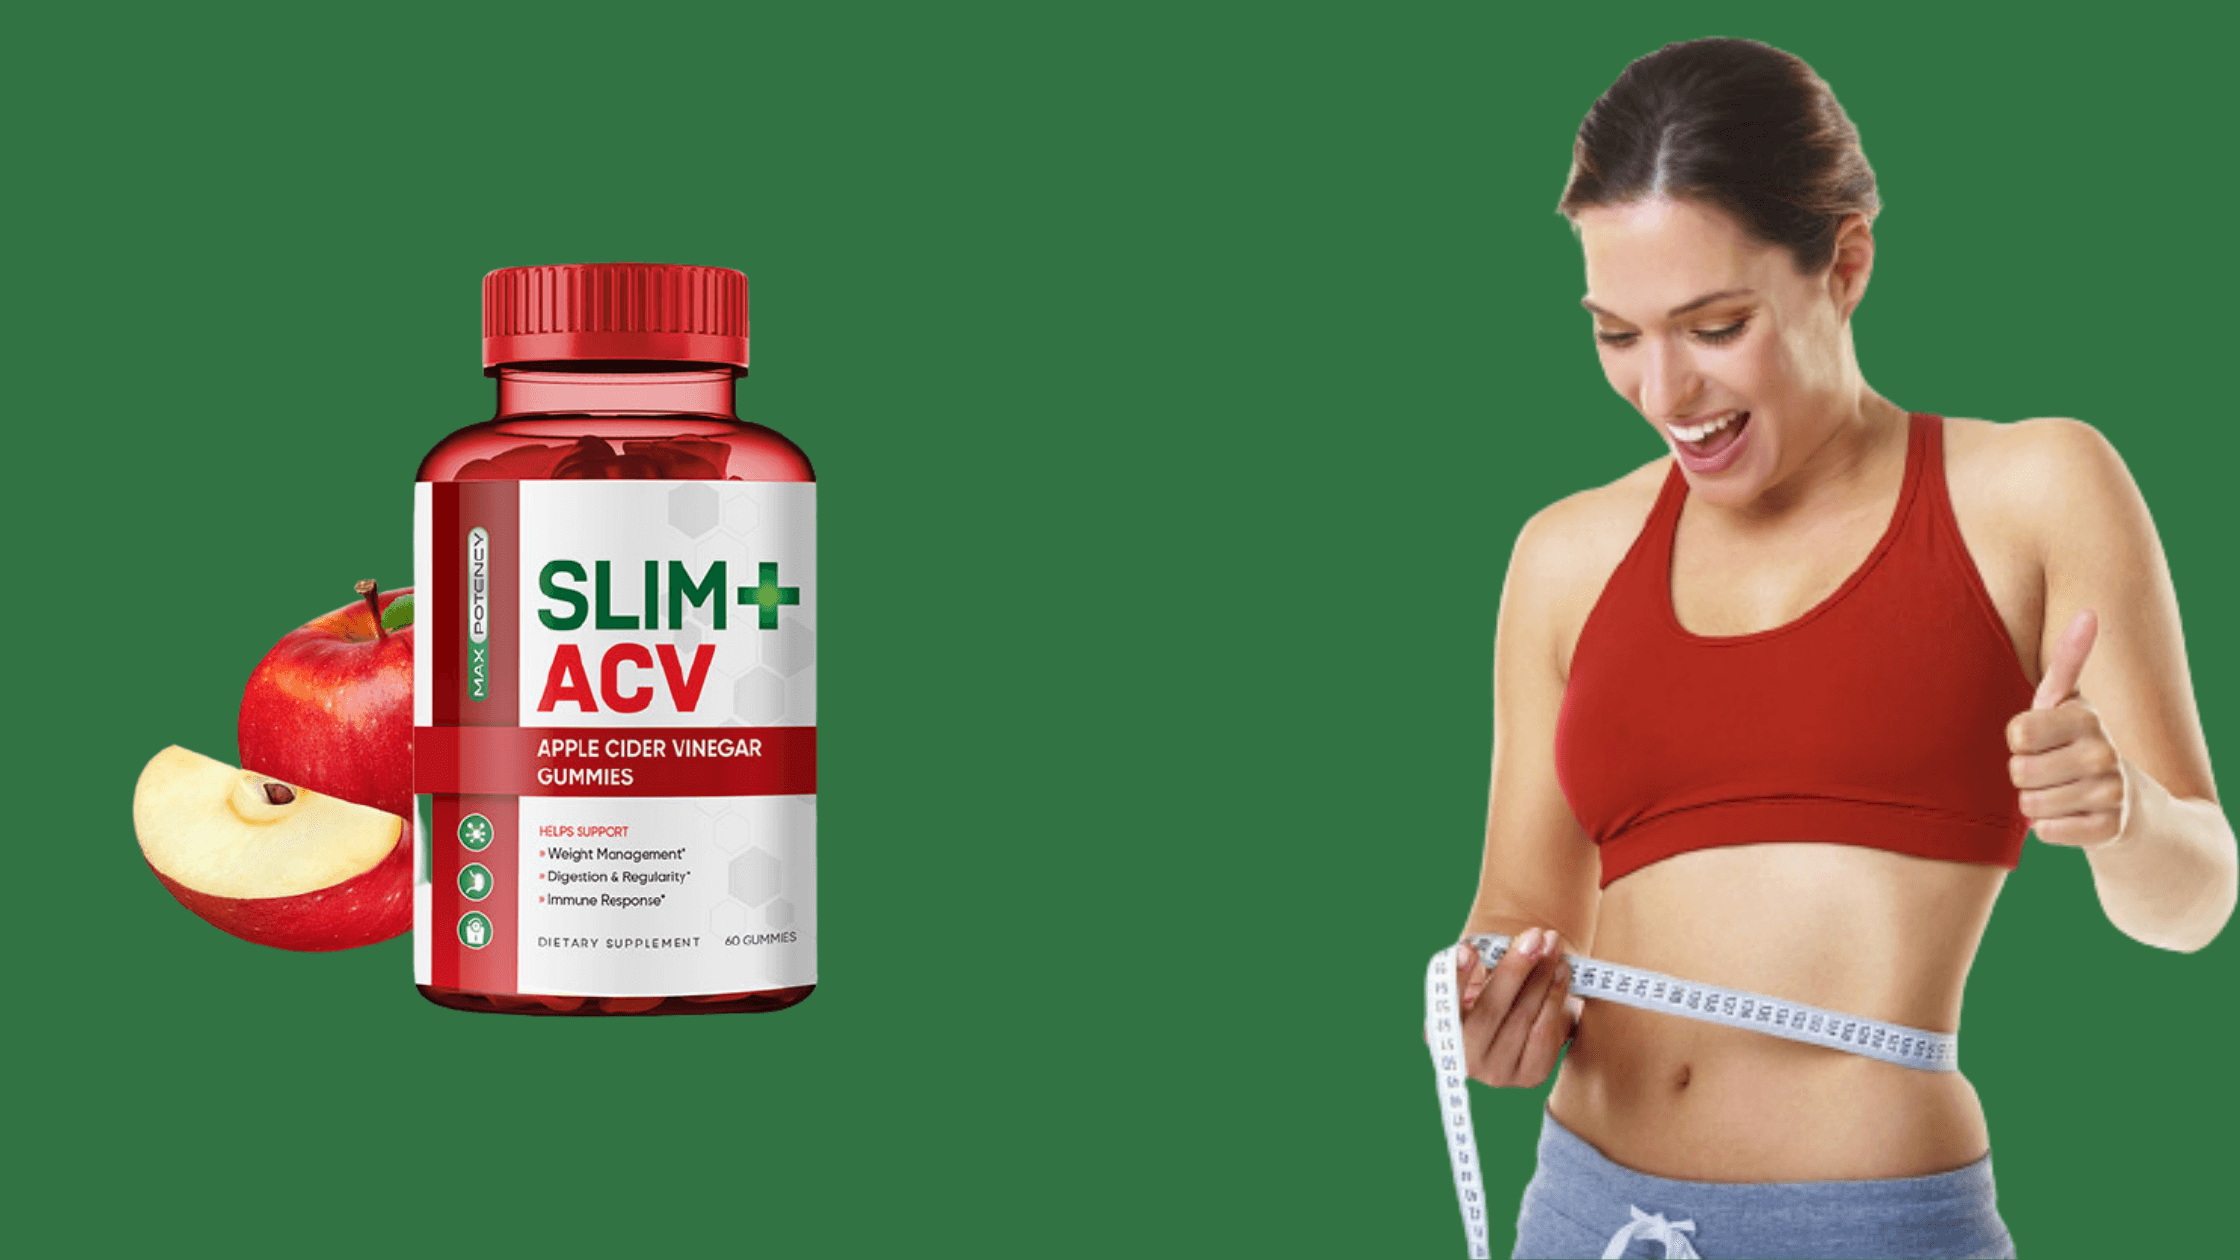 Slim+ ACV UK Gummies Health Benefits